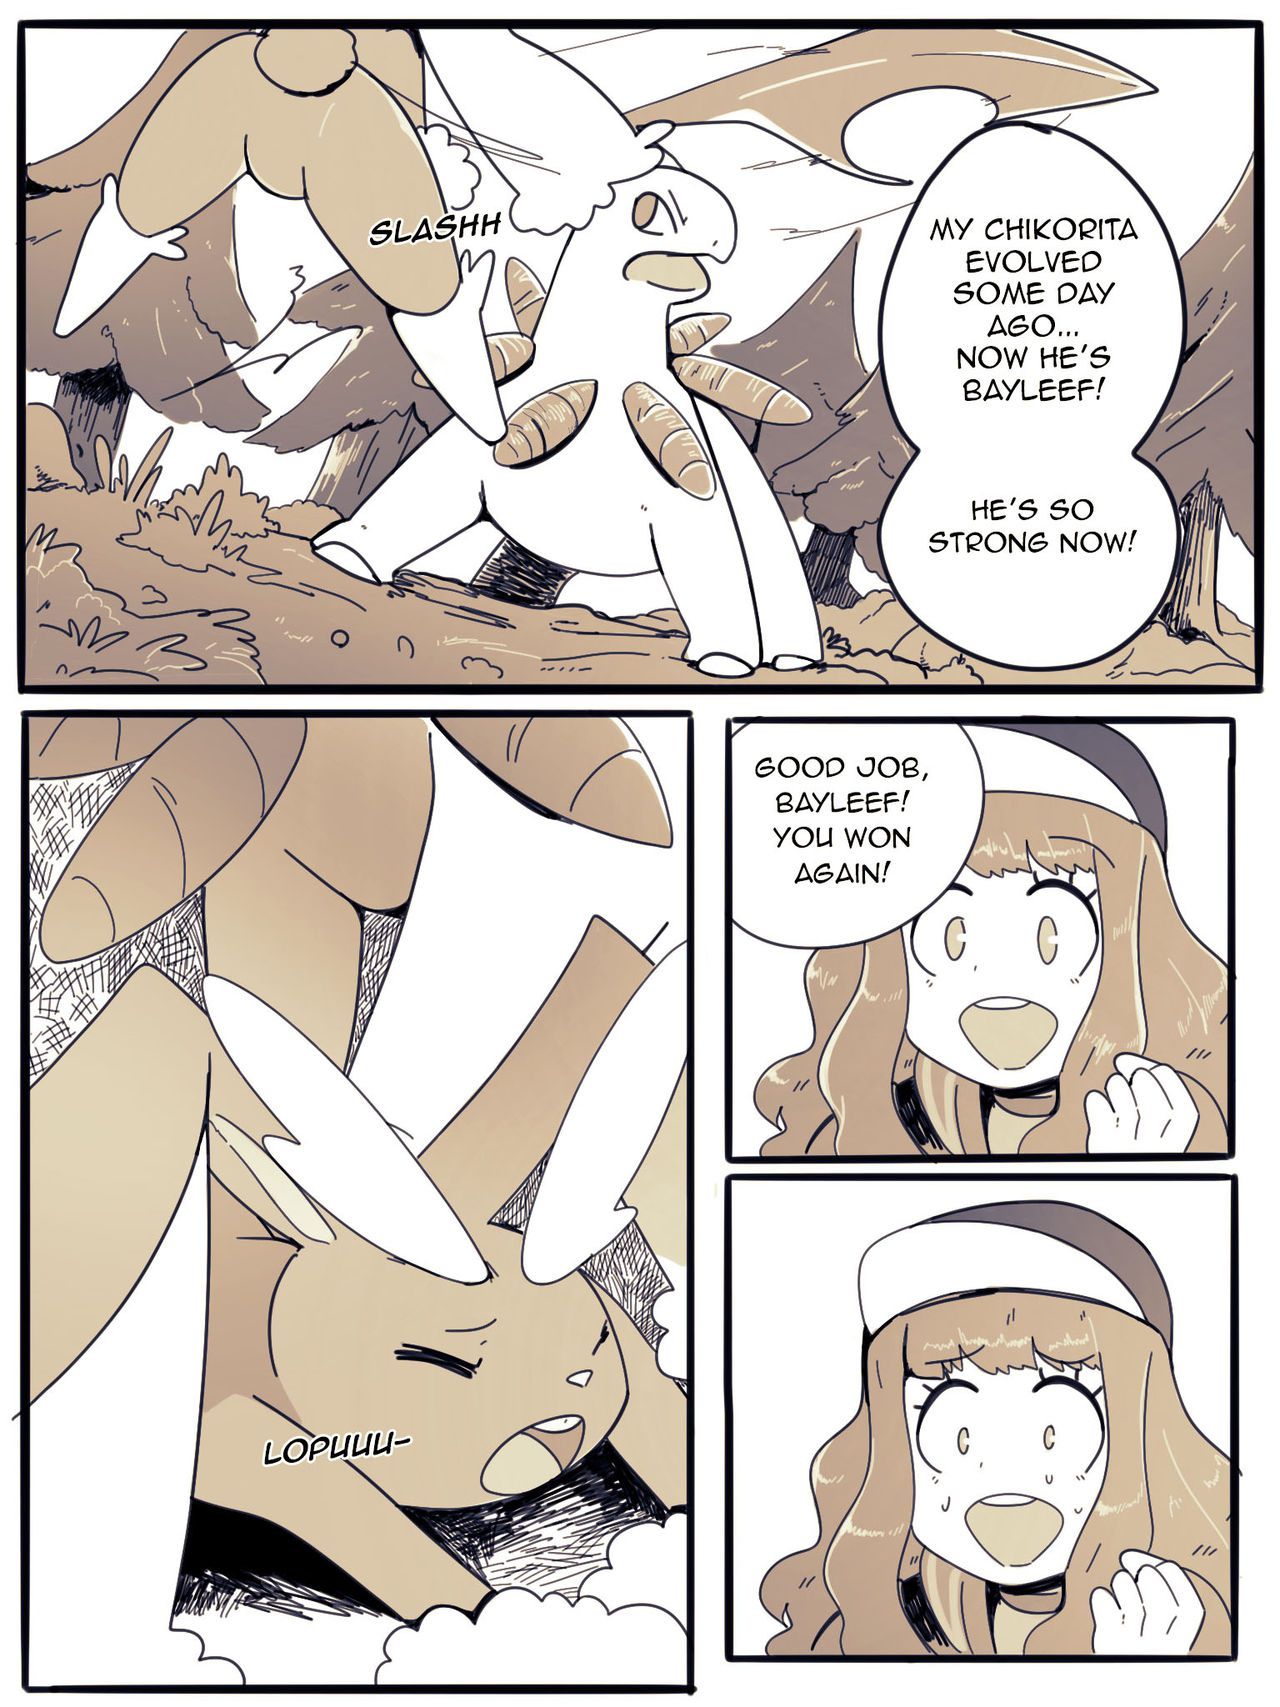 [Wolfrad Senpai] Chikorita is my best friend! (Pokemon) [Ongoing] 5